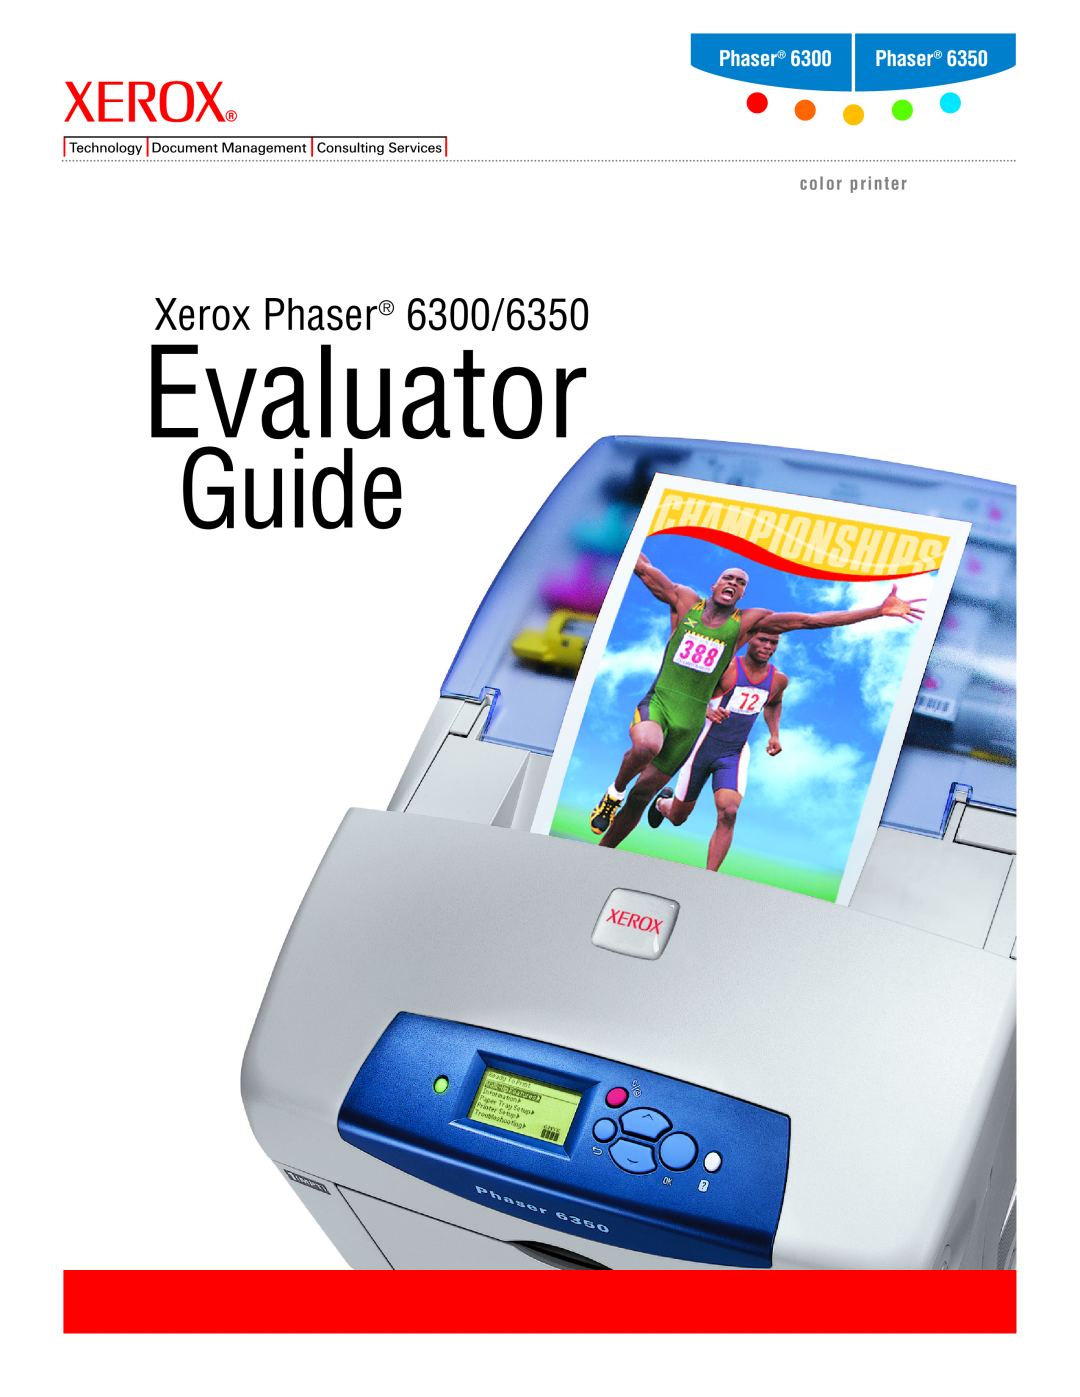 Xerox manual Evaluator, Guide, Xerox Phaser 6300/6350, color printer 